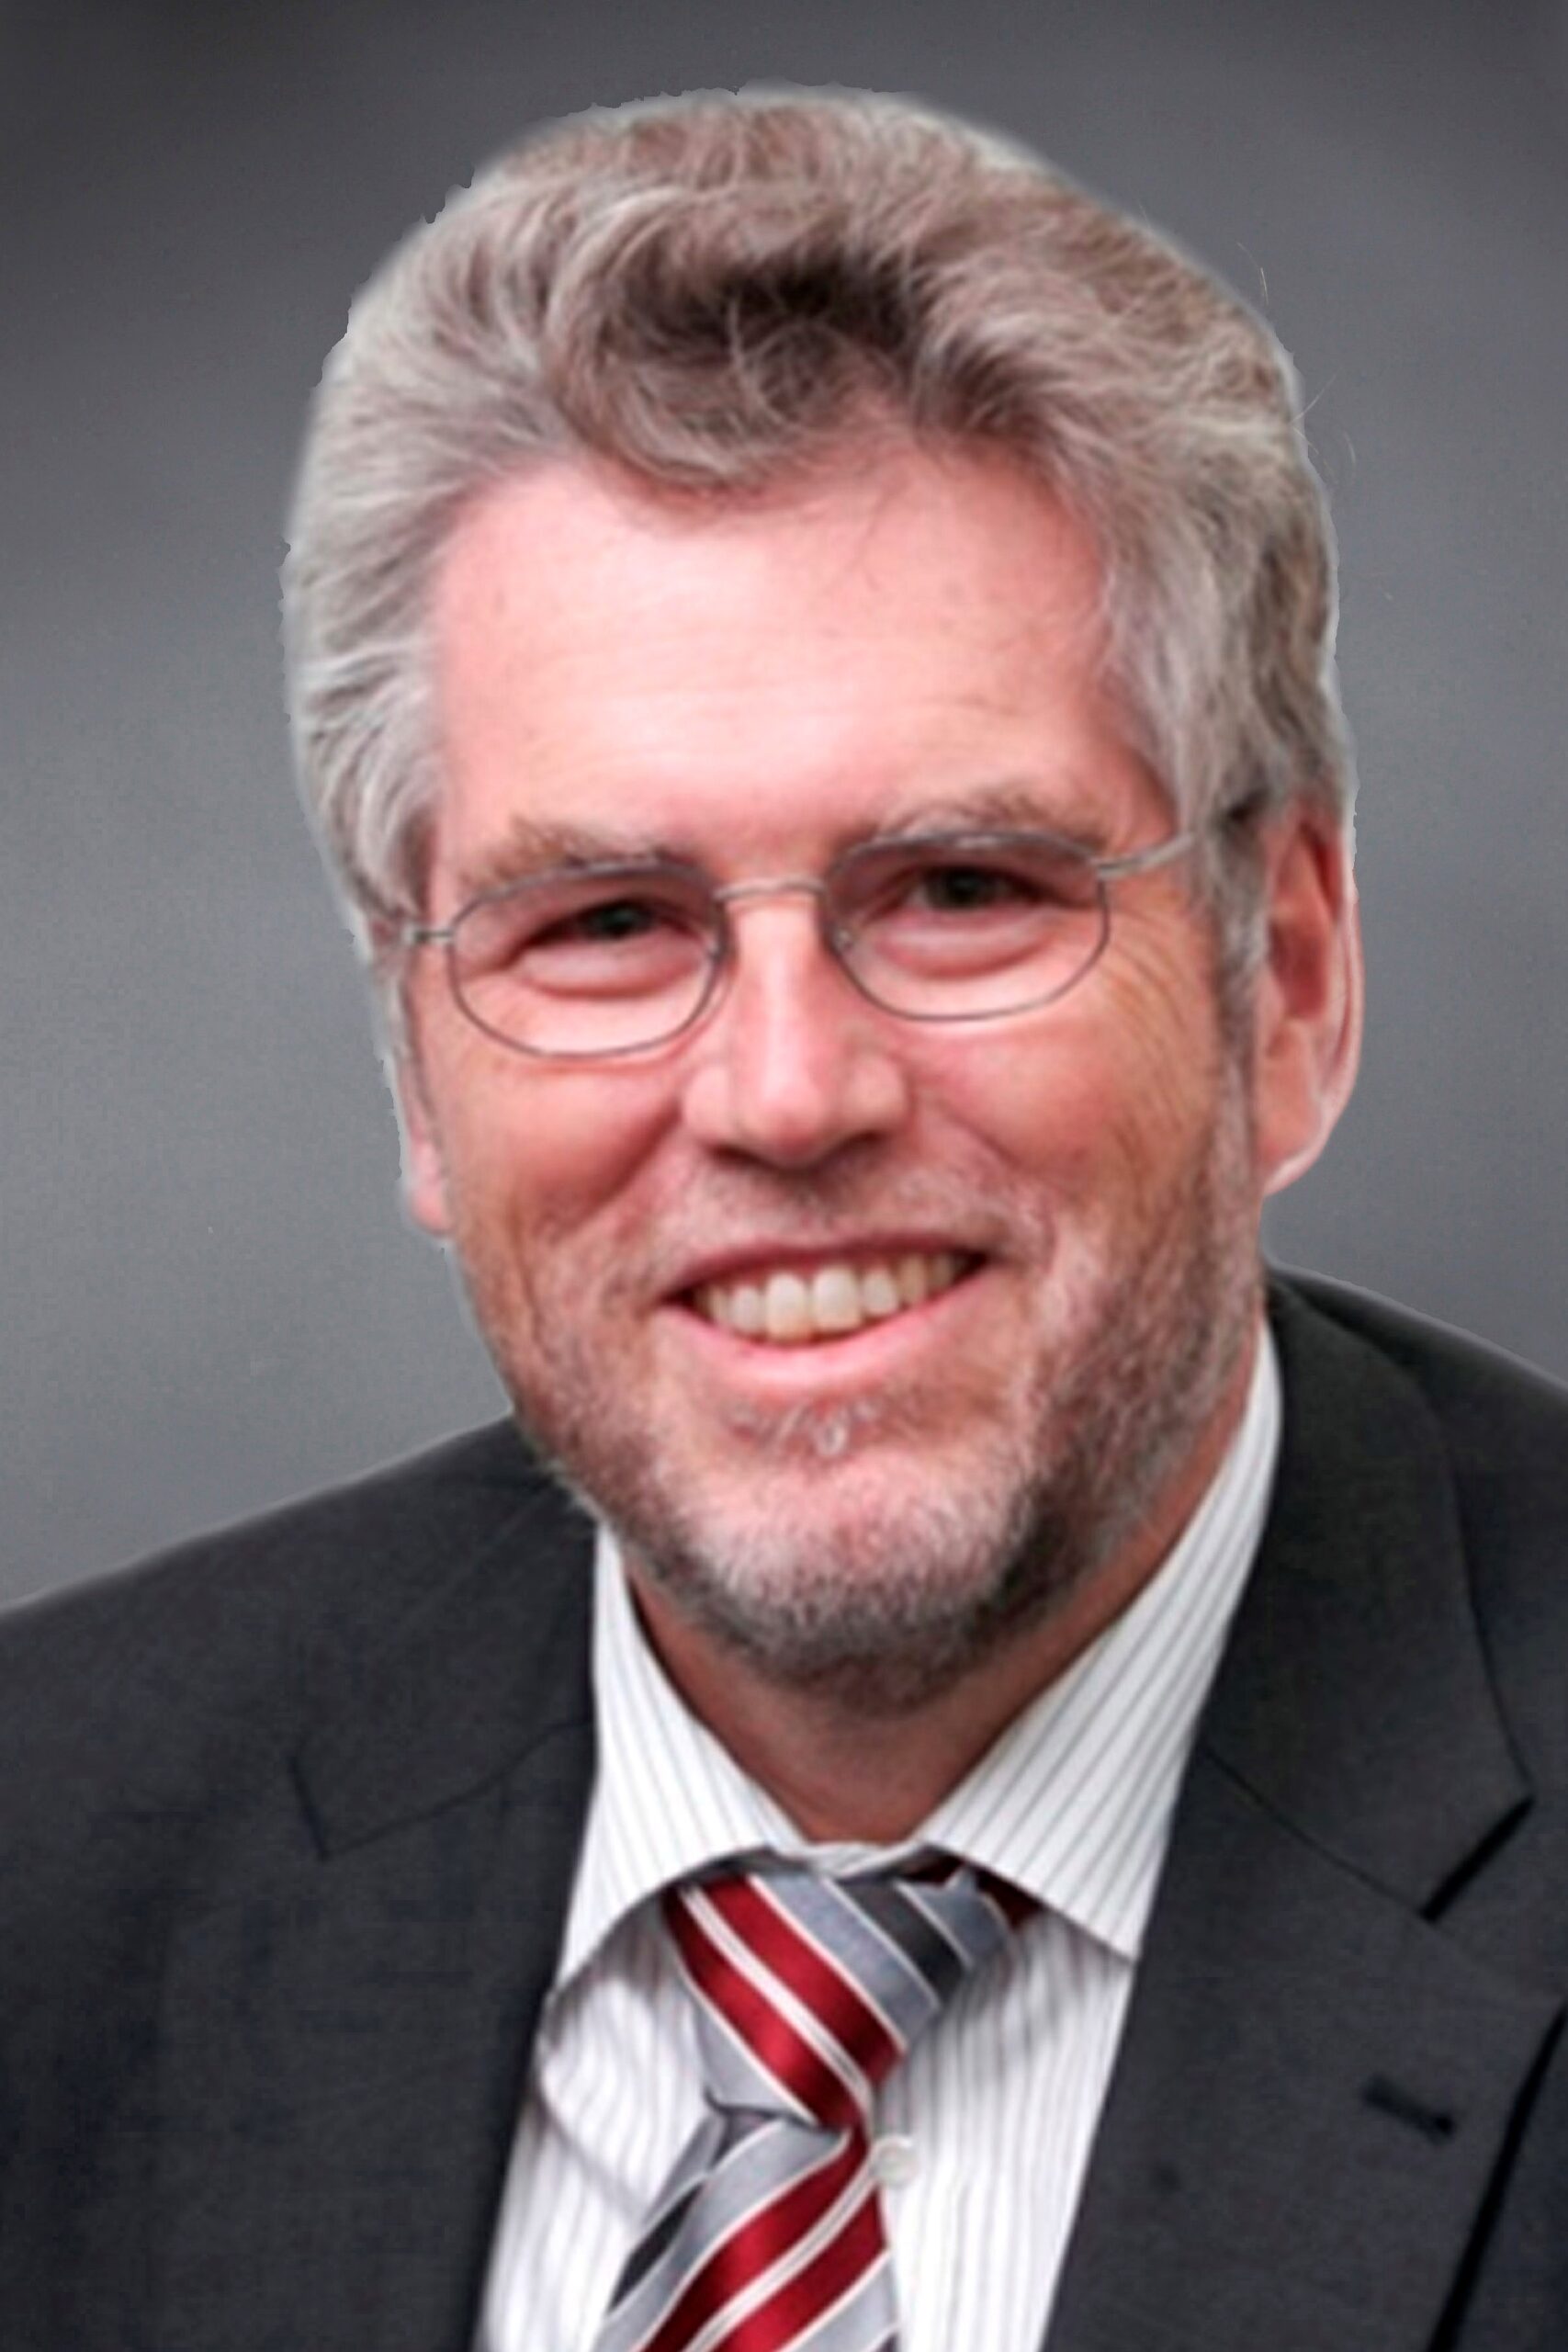 Dr.-Ing. Ulrich Clormann